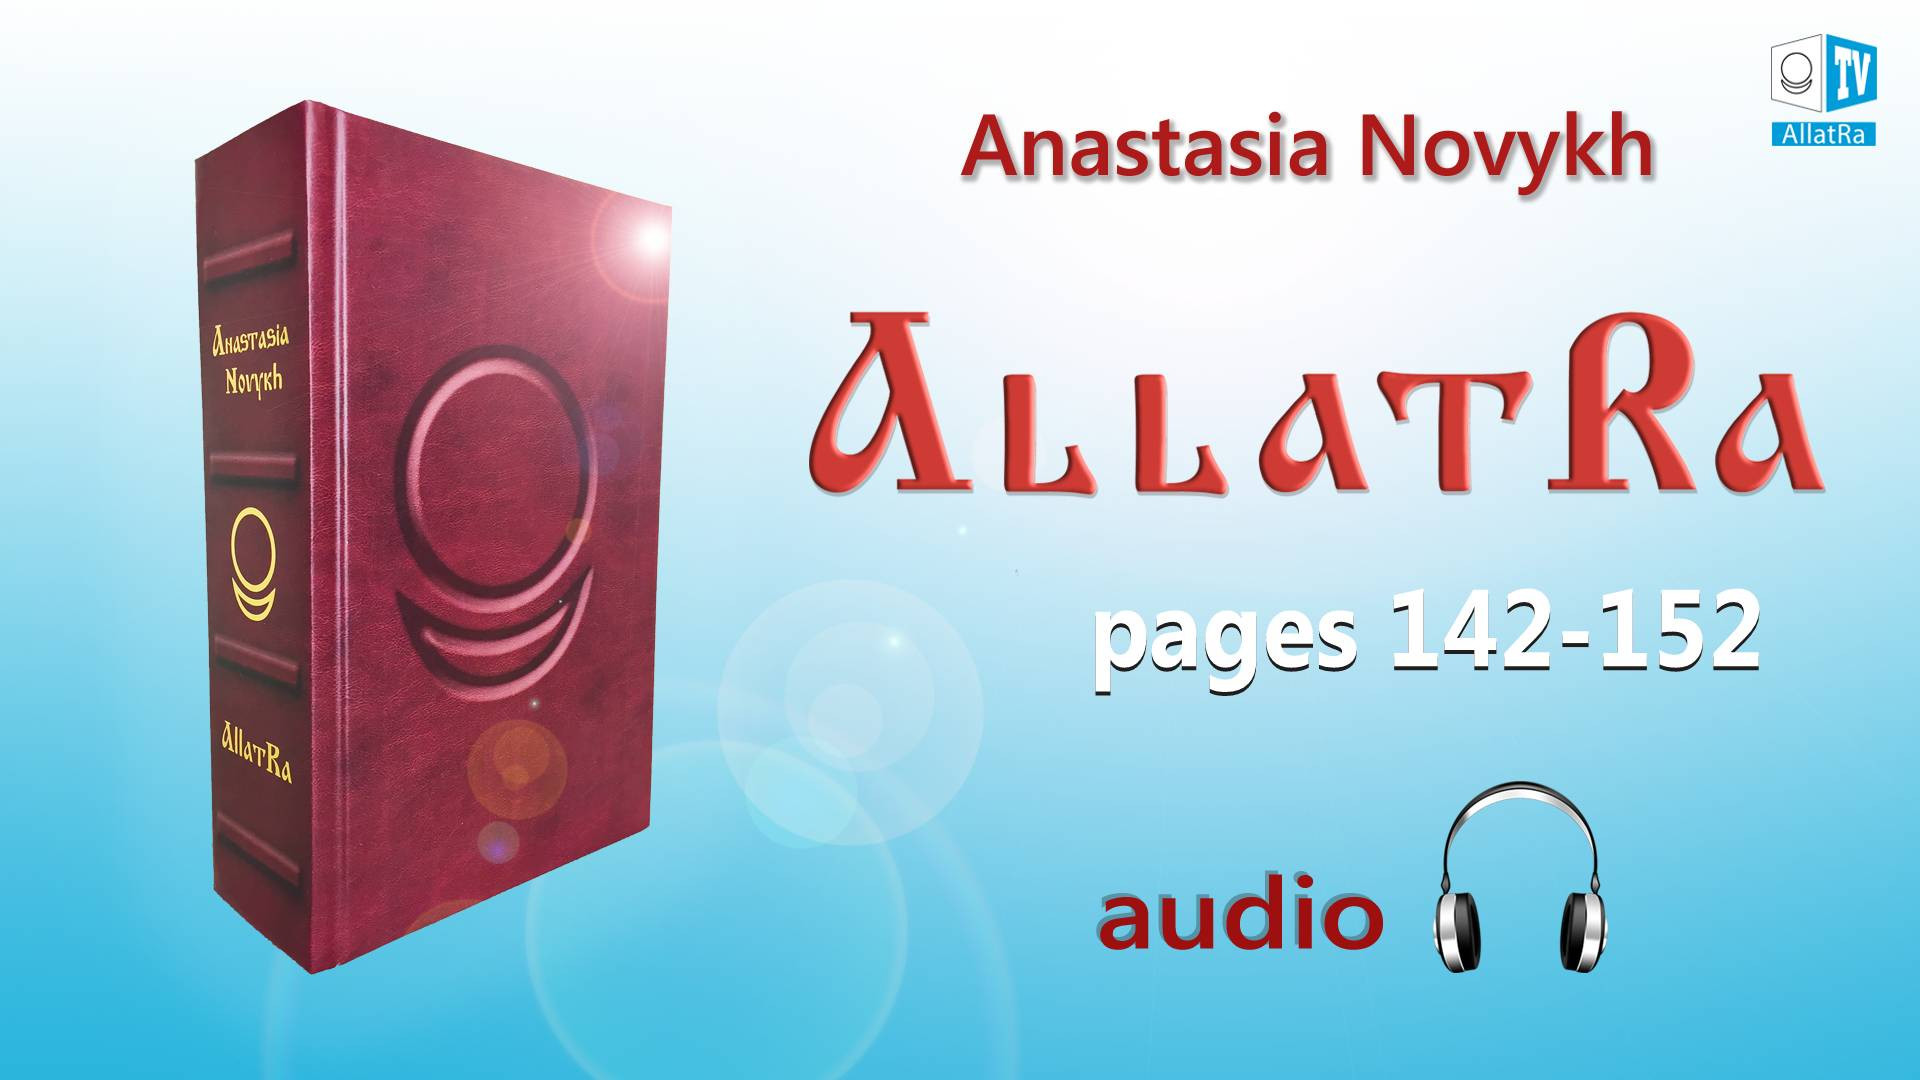 АllatRa. Anastasia Novykh. Audiobook. Pages 142-152